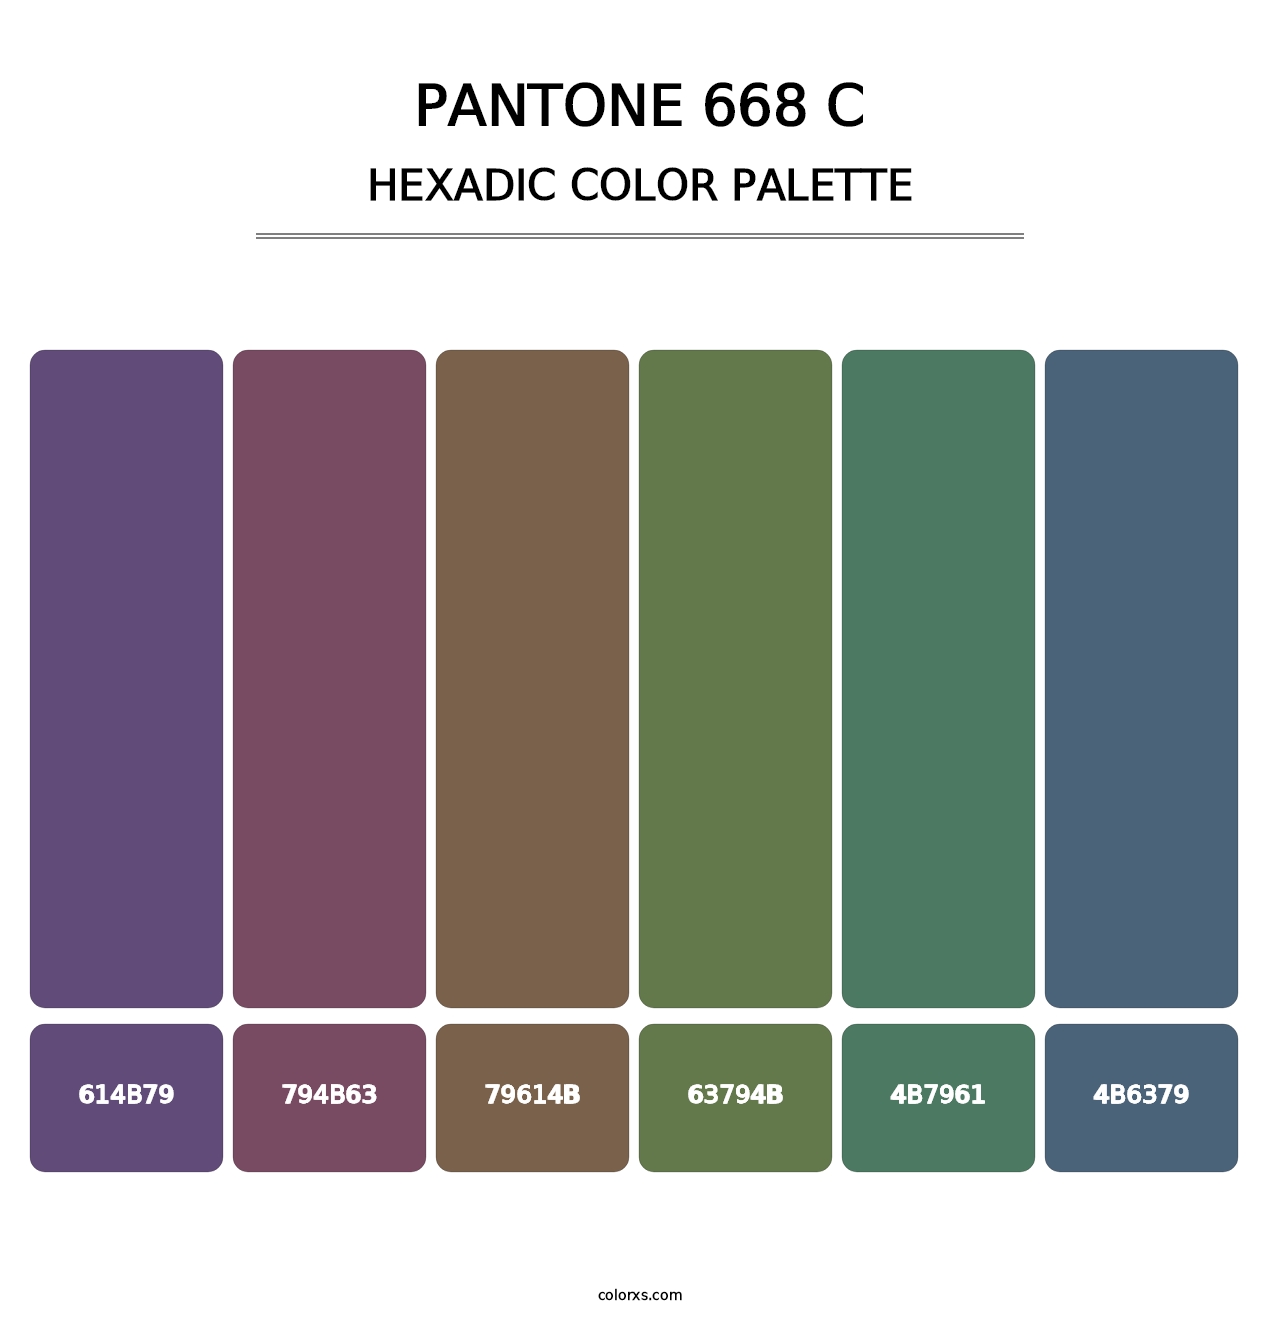 PANTONE 668 C - Hexadic Color Palette